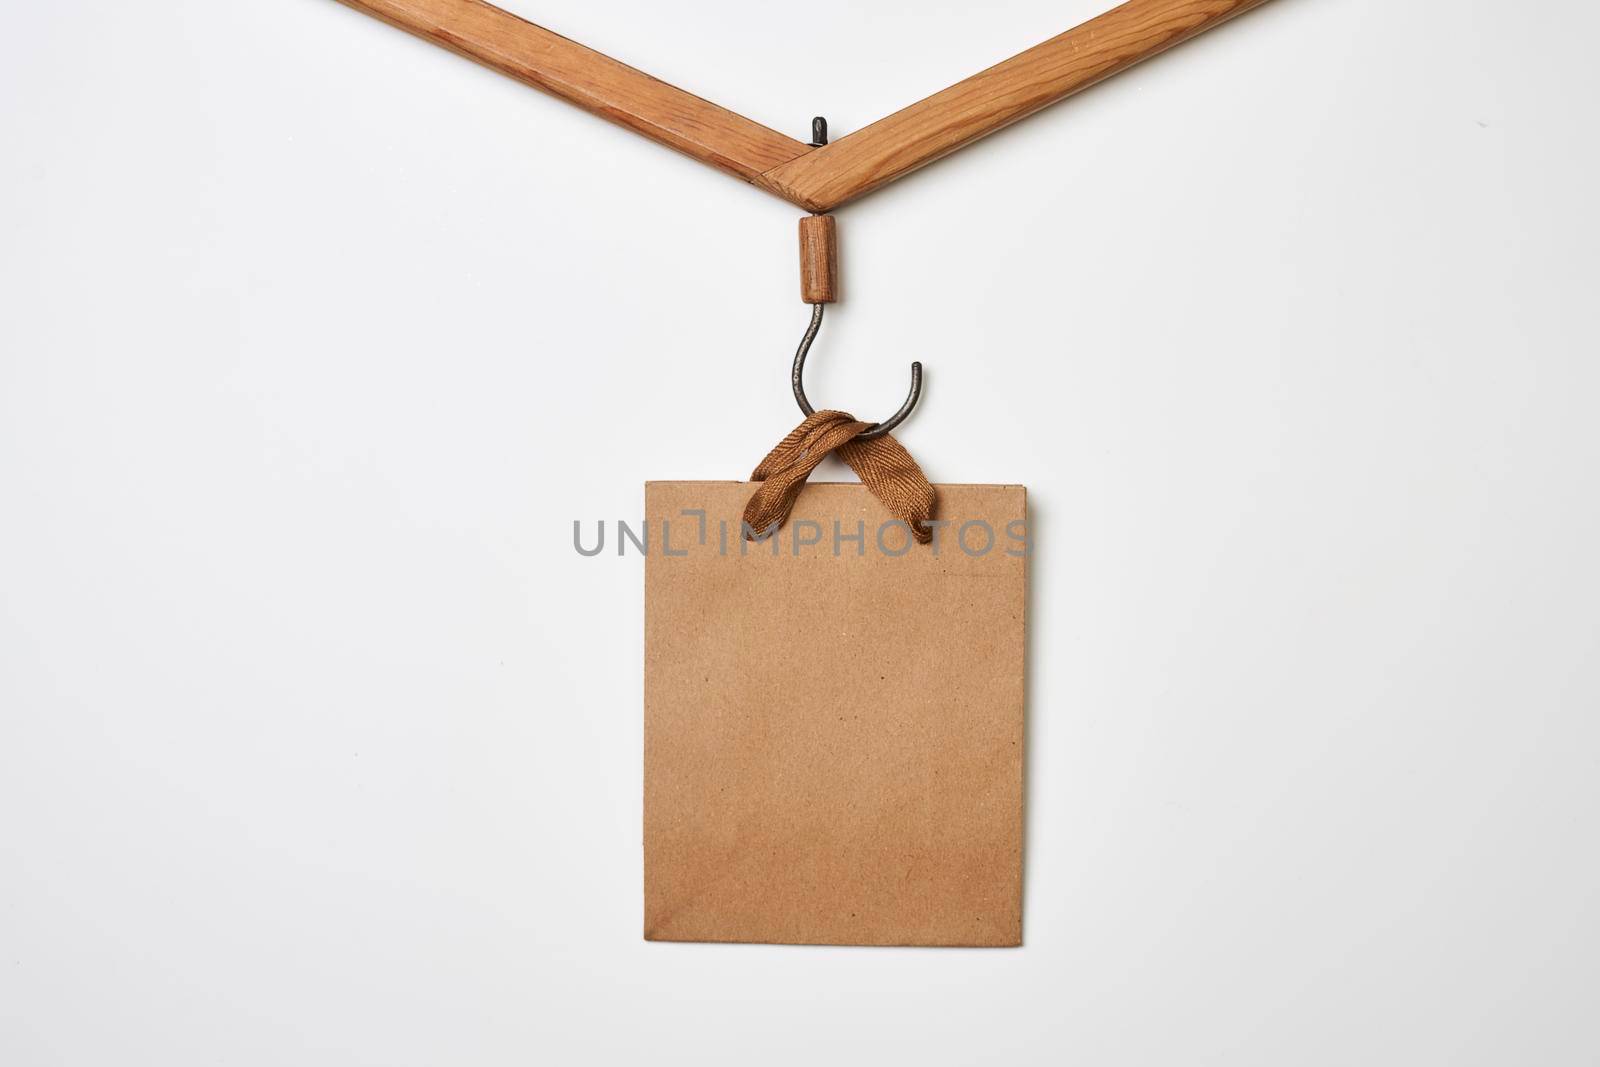 Black friday concept. Shopping bag on cloth holder on white background